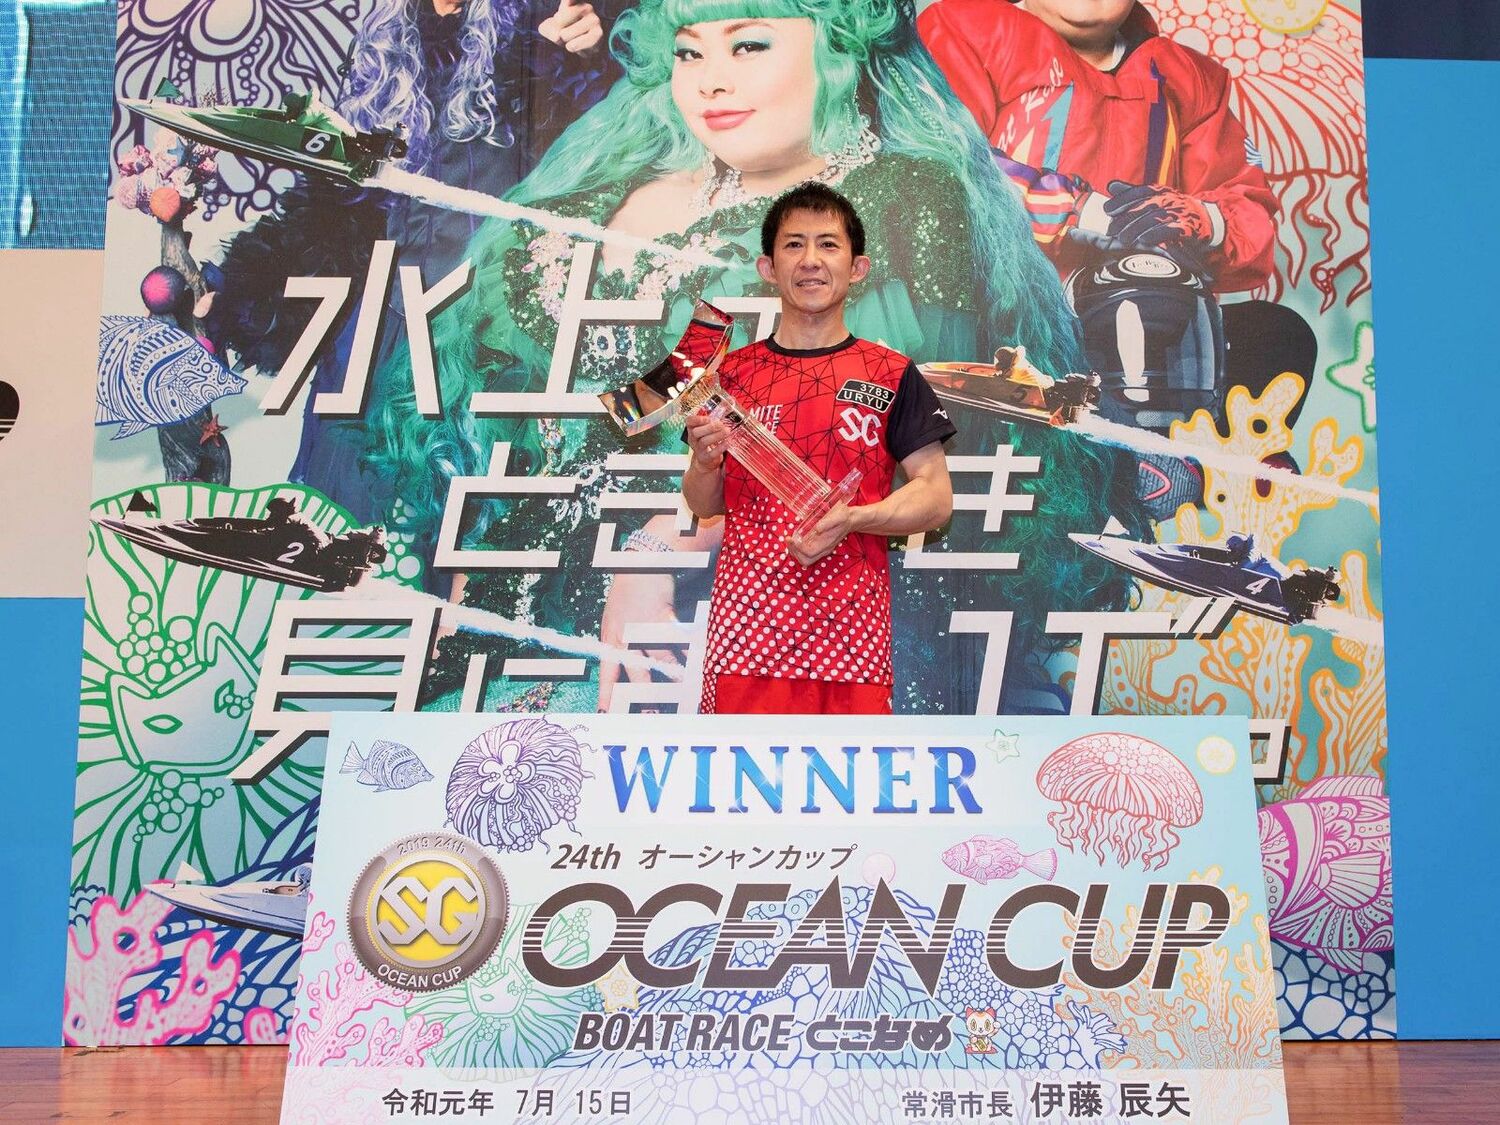 SGオーシャンカップを制した瓜生正義選手